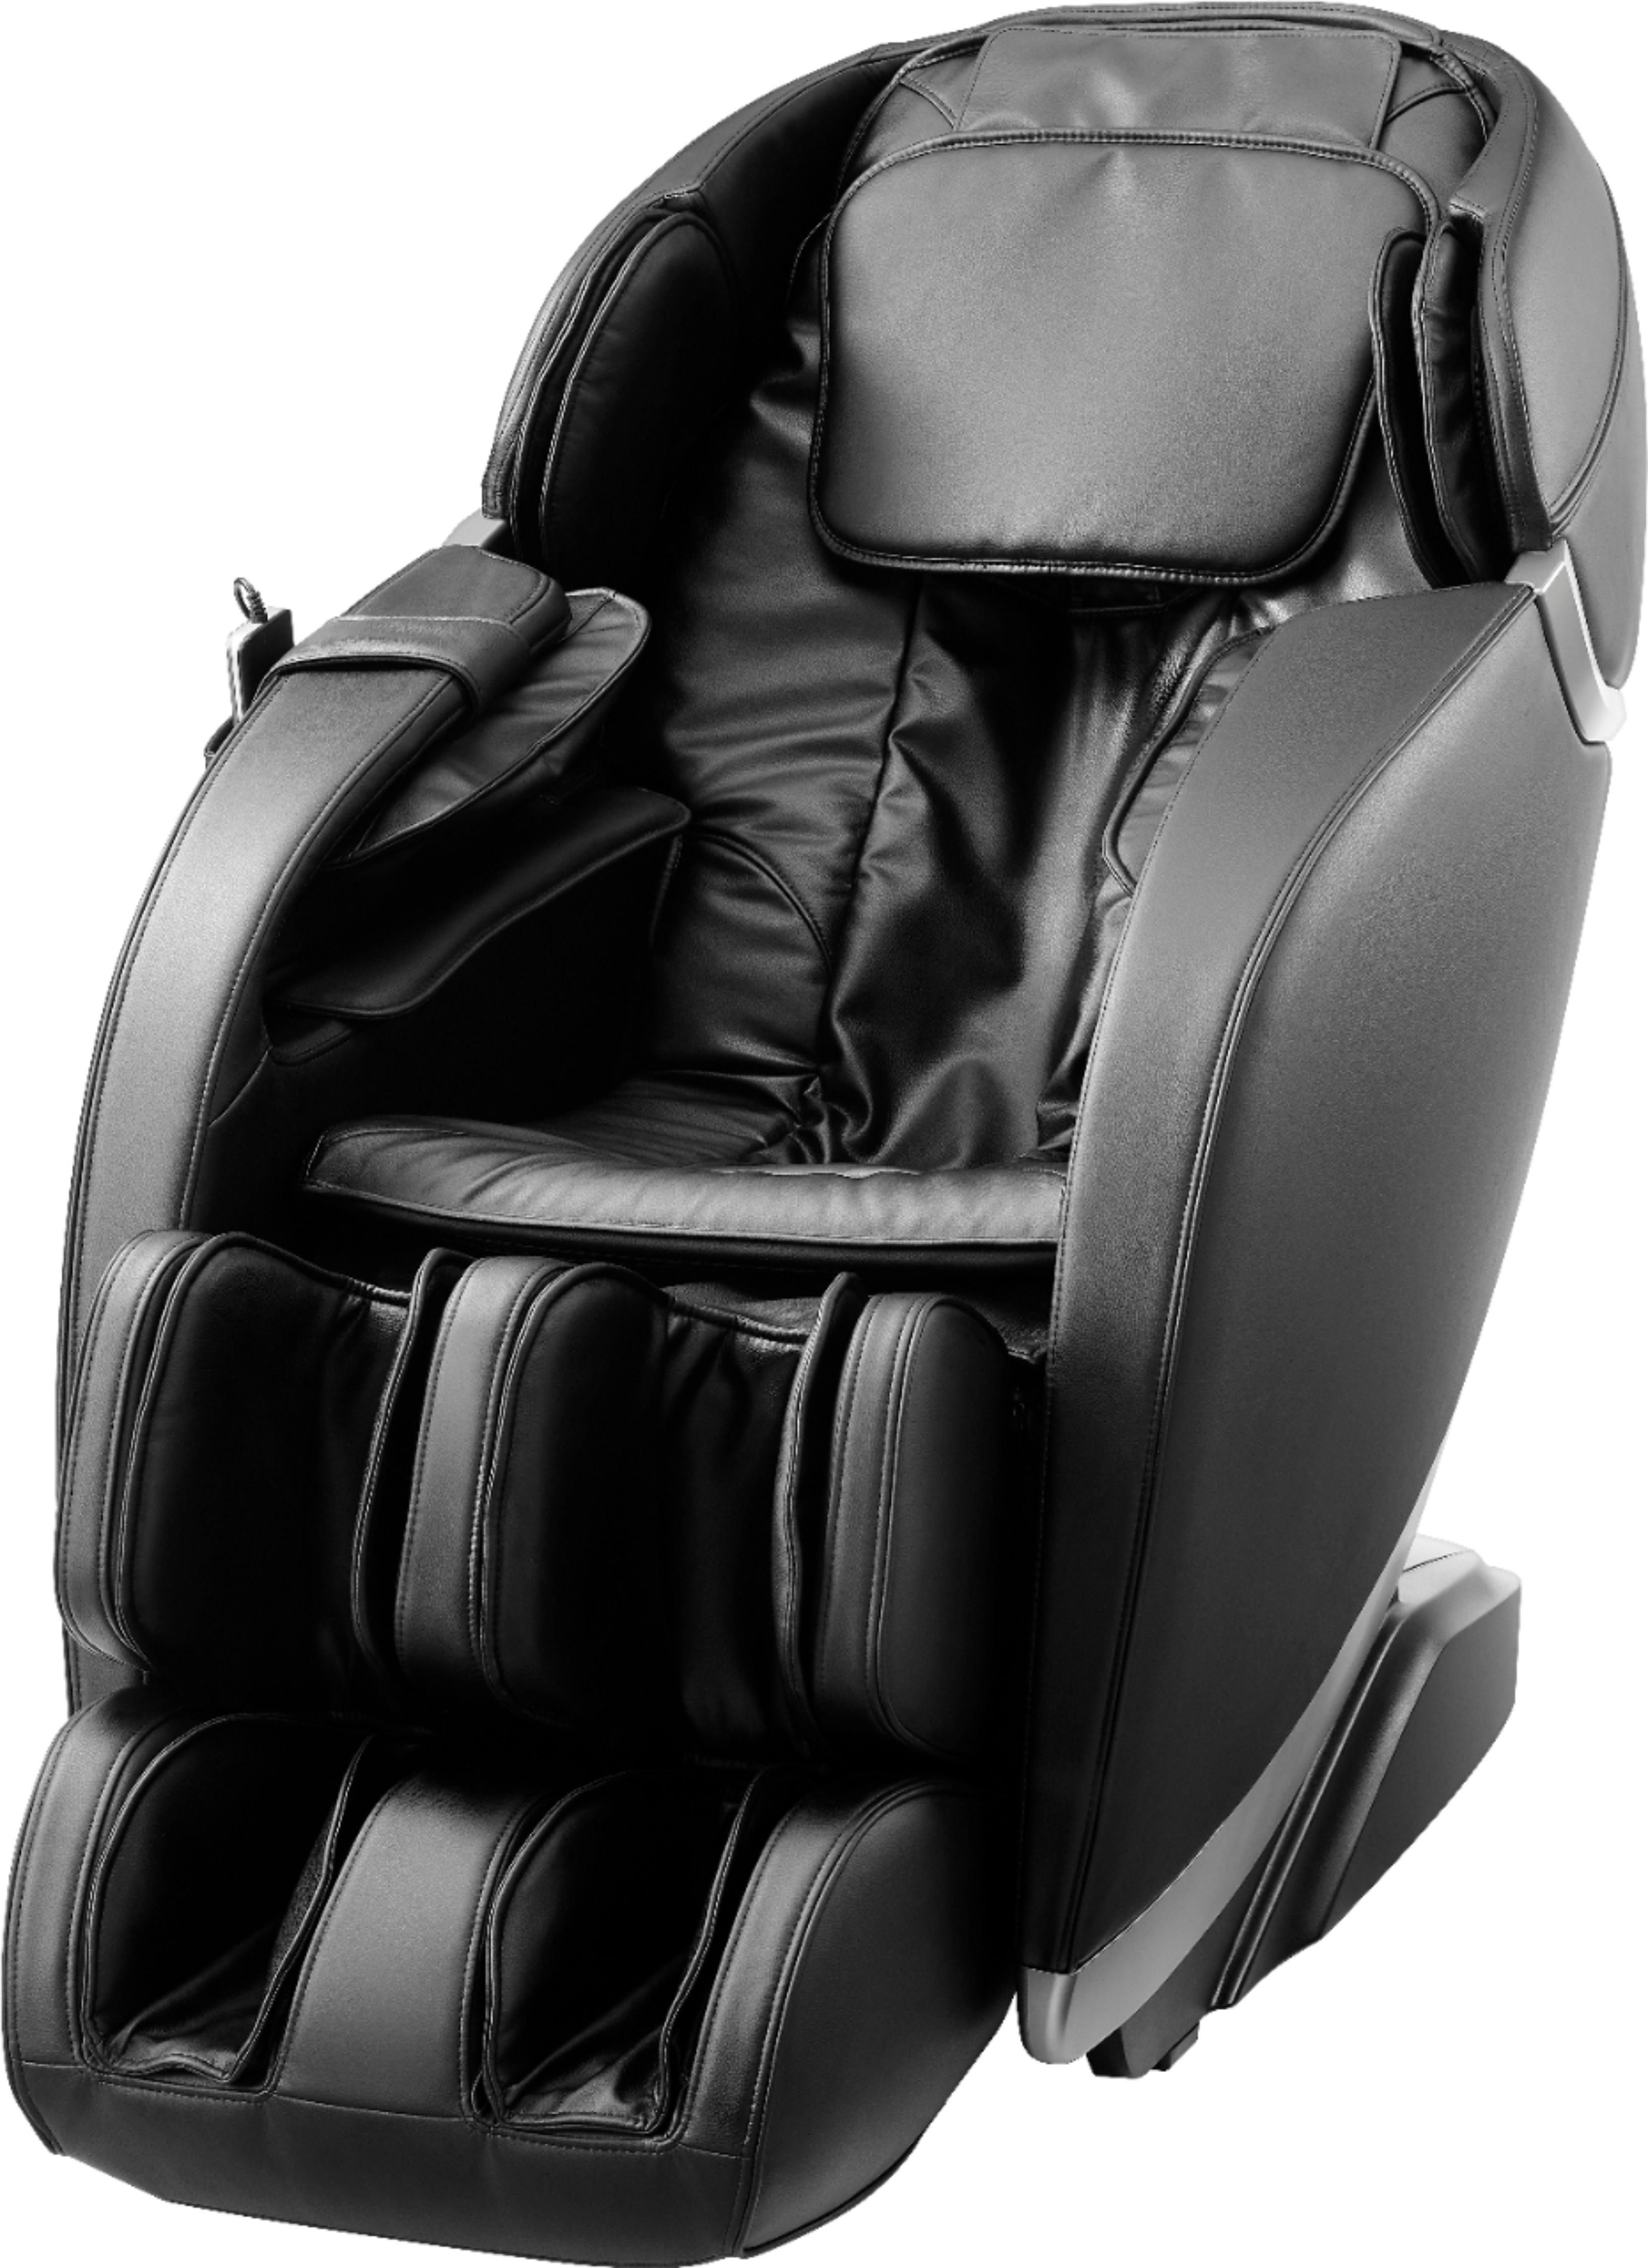 Insignia™ Zero Gravity Full Body Massage Chair Black With Silver Trim 